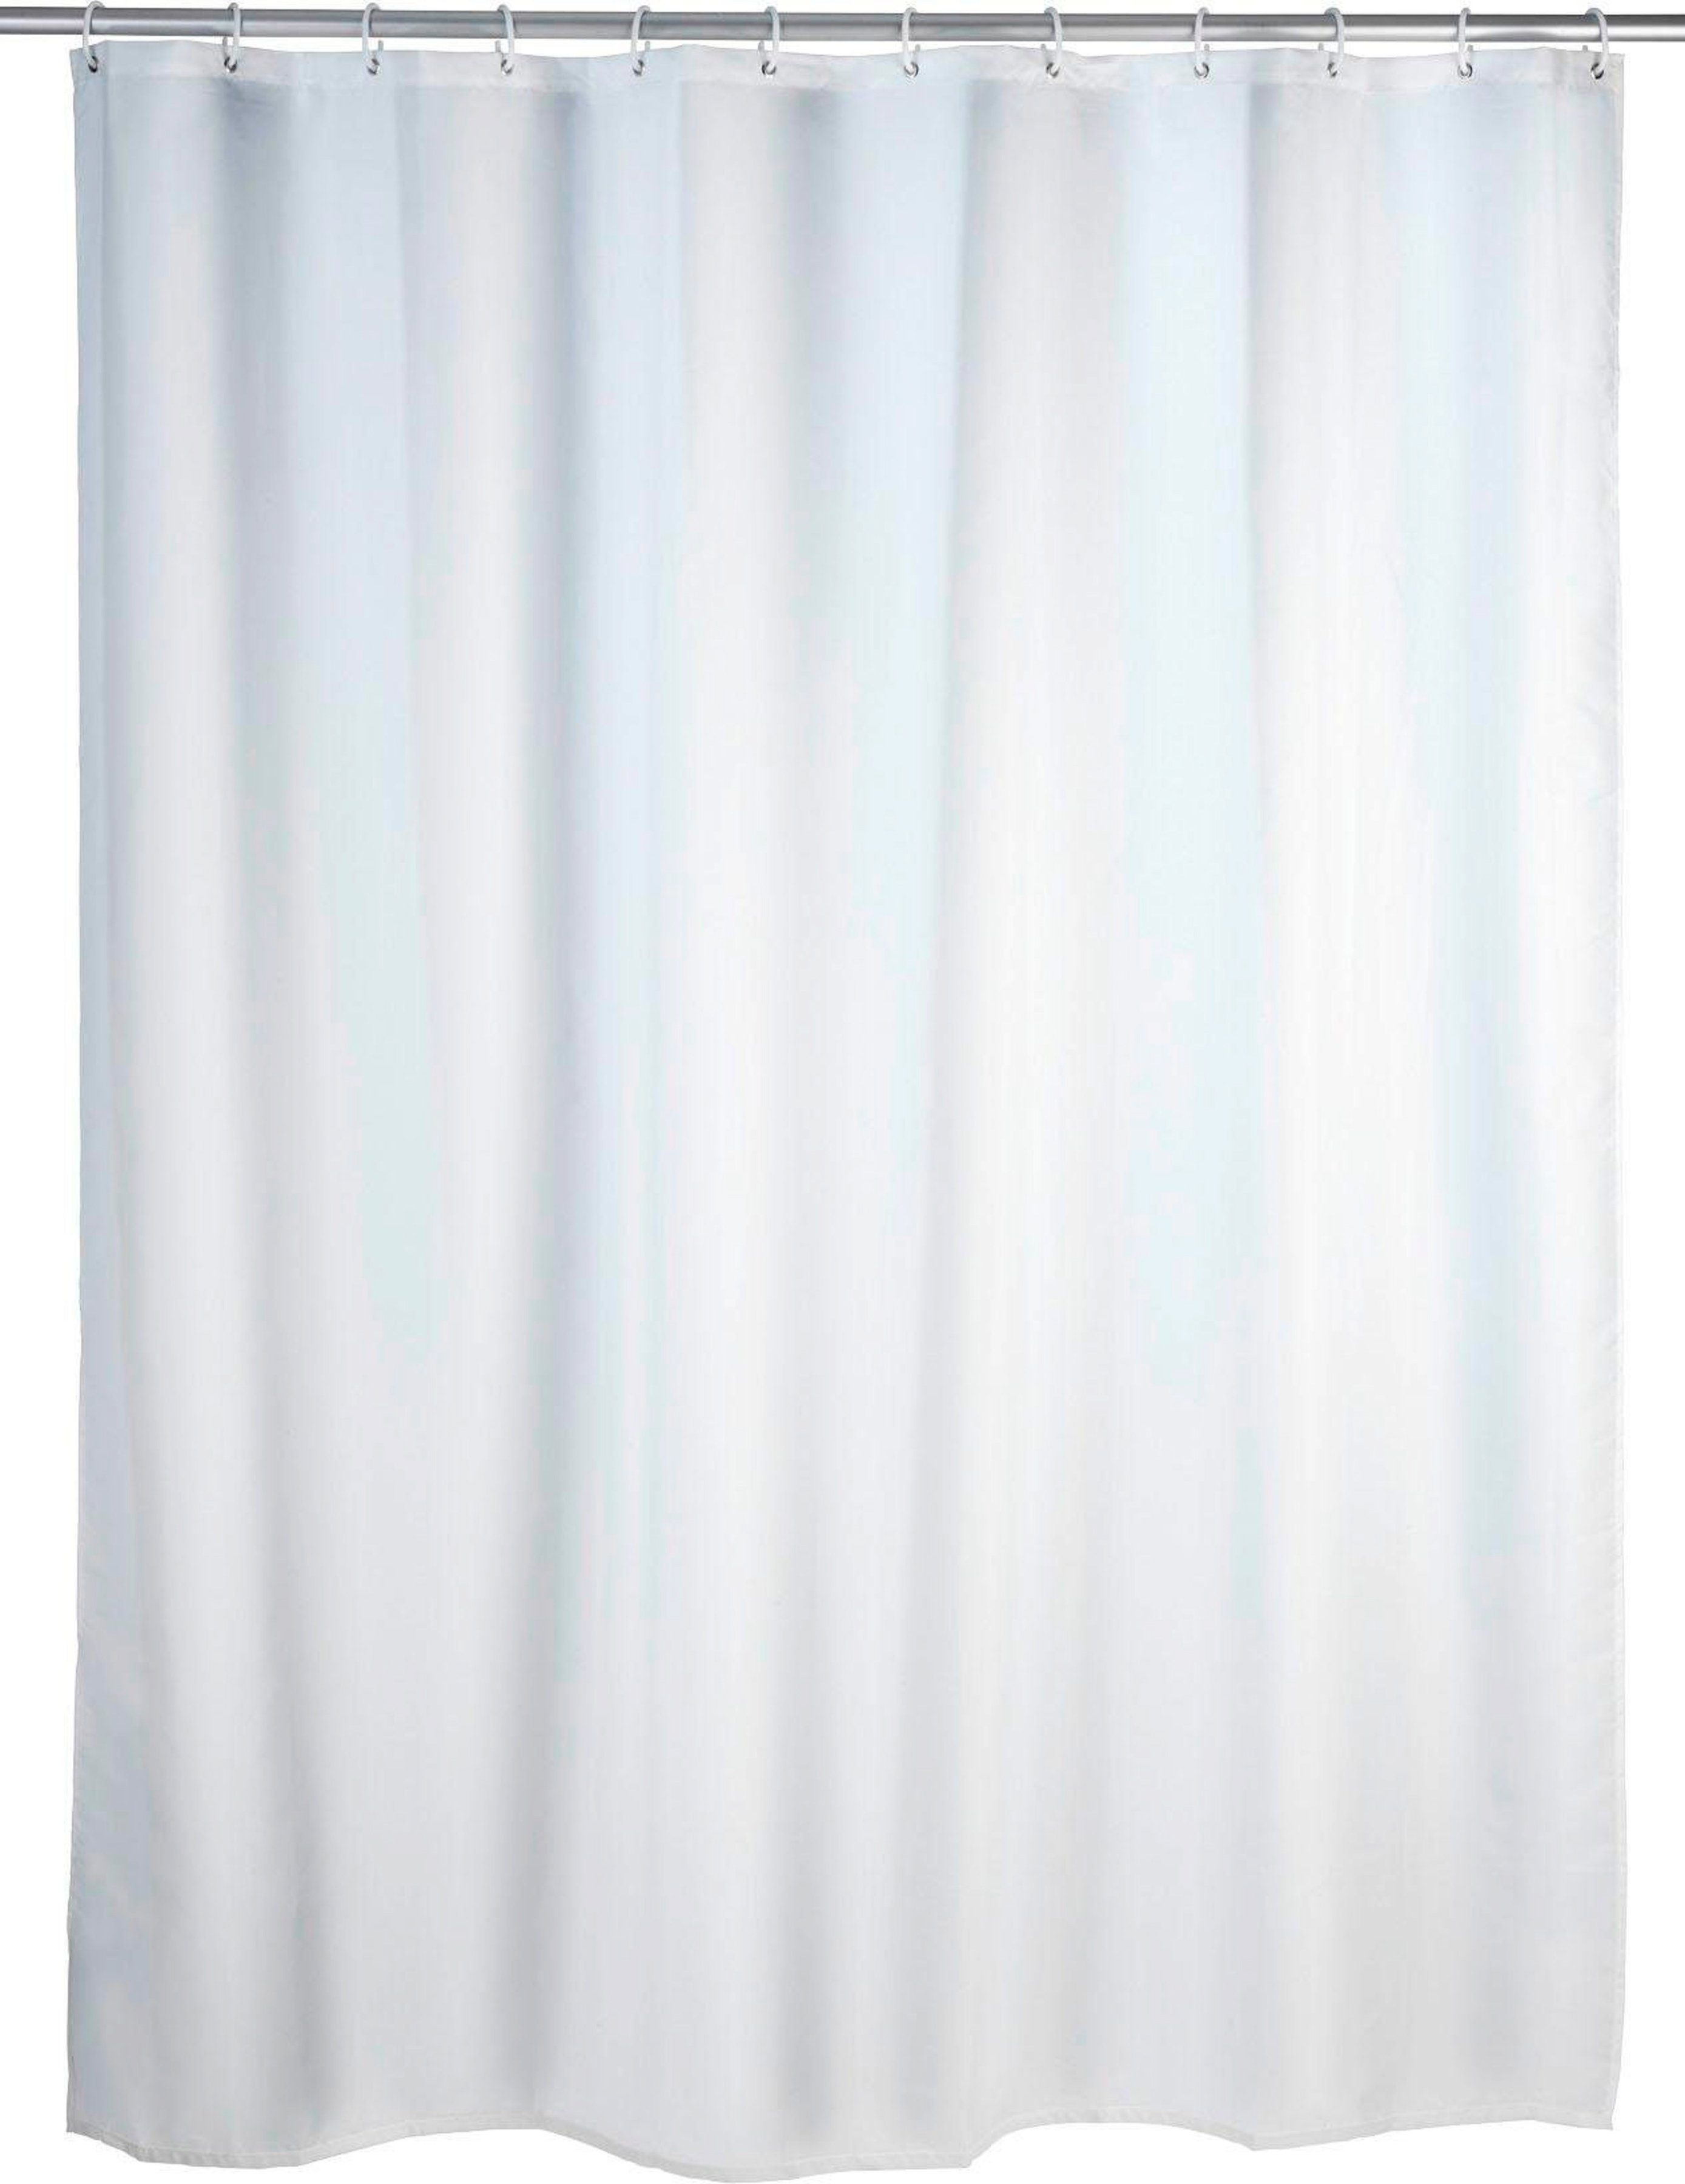 Wenko gordijn douche gordijn 120x200xcm Polyester wit